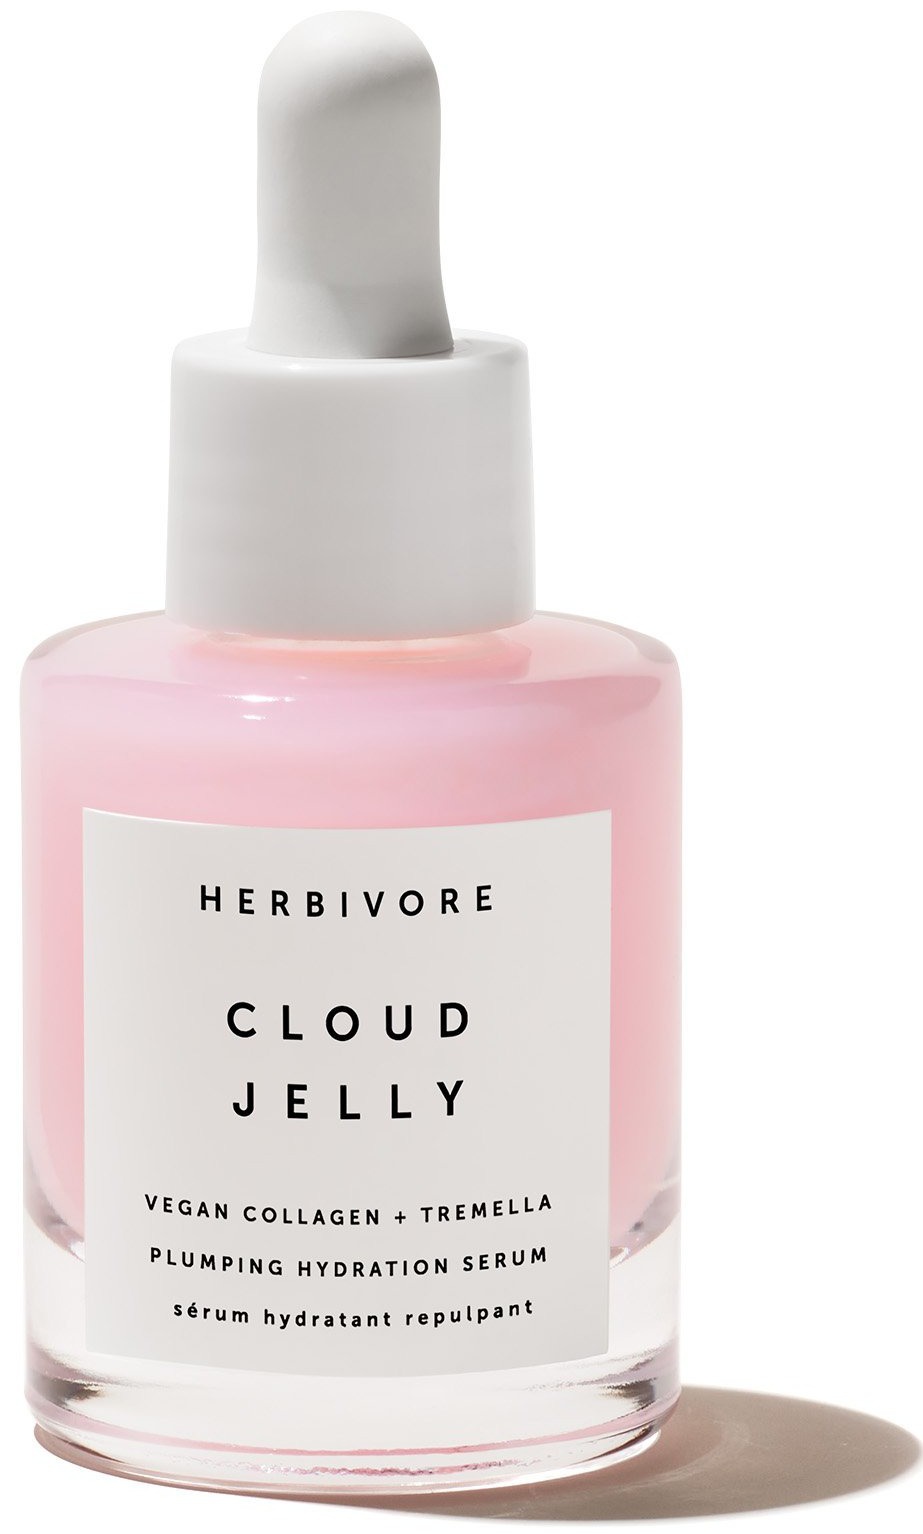 Herbivore Cloud Jelly Plumping Hydration Serum